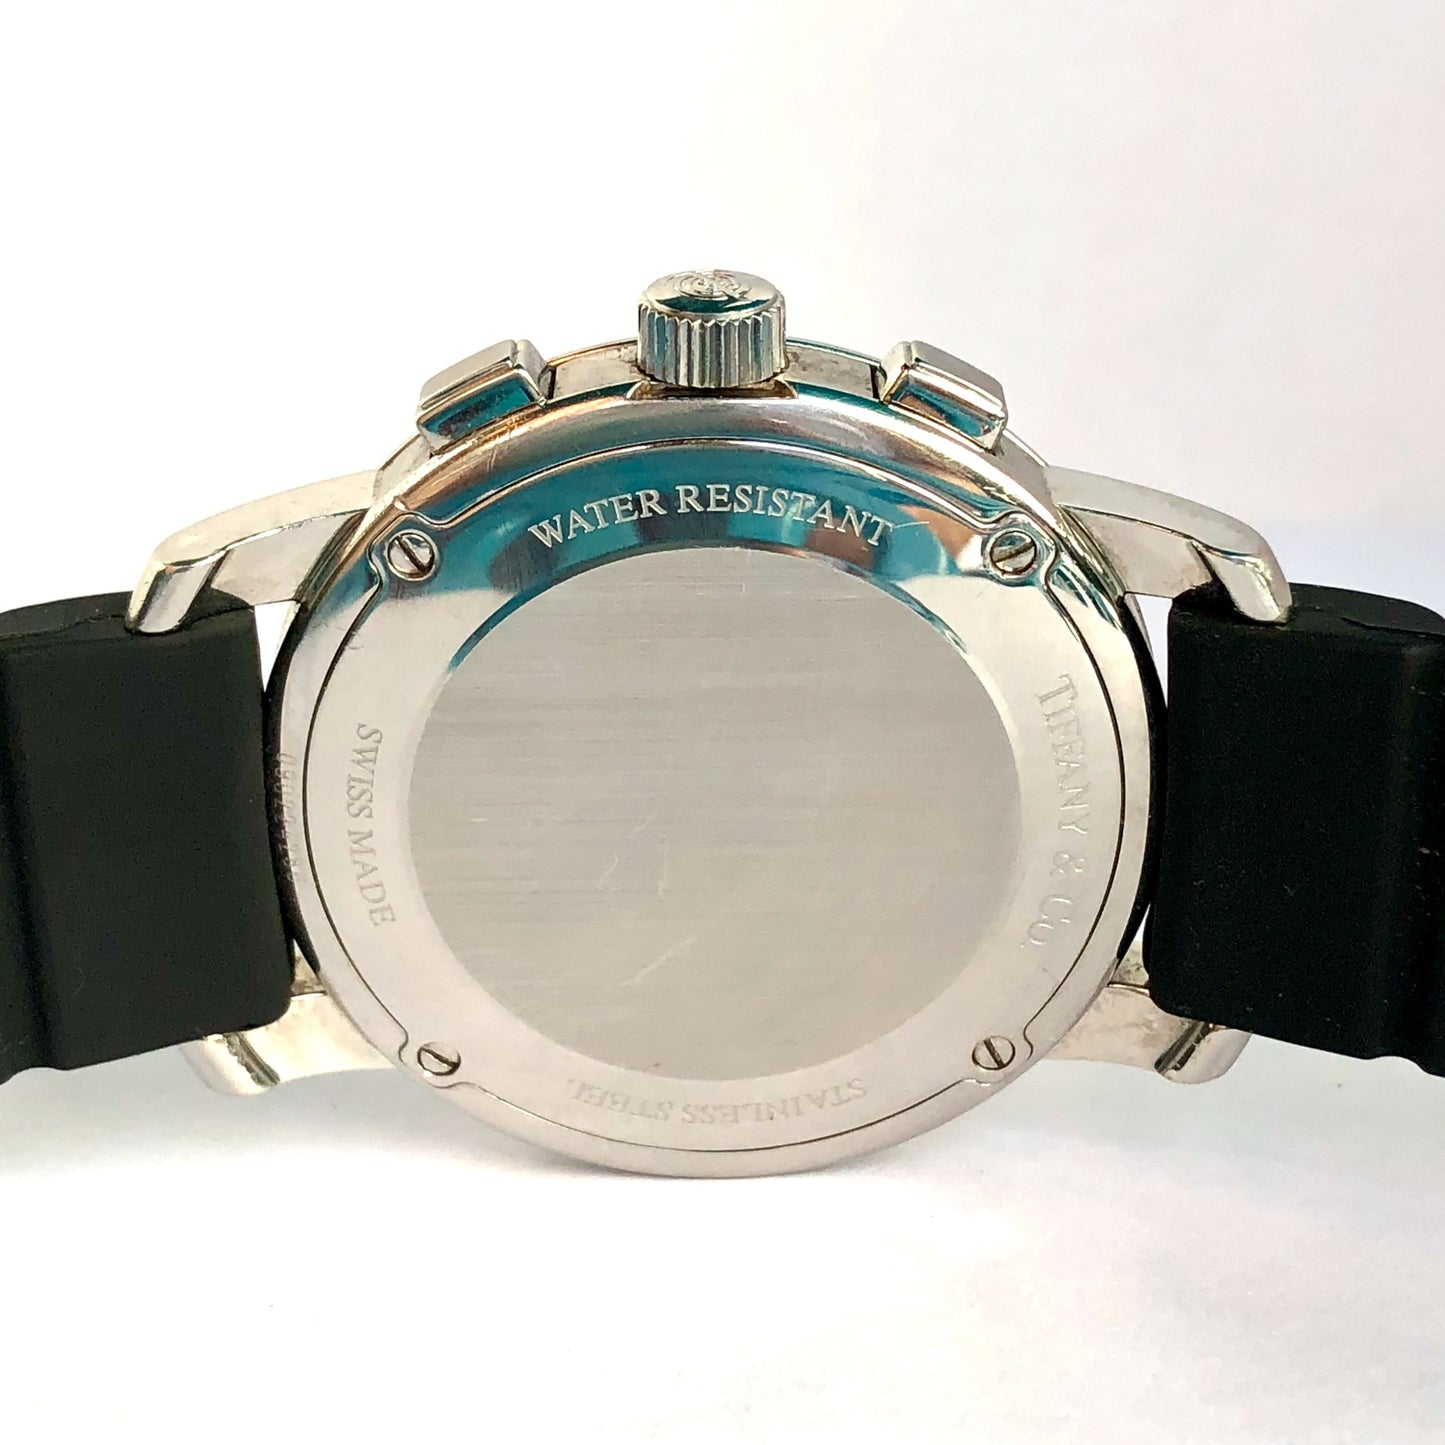 TIFFANY & CO. Chronograph Quartz 36mm Steel DIAMOND Watch